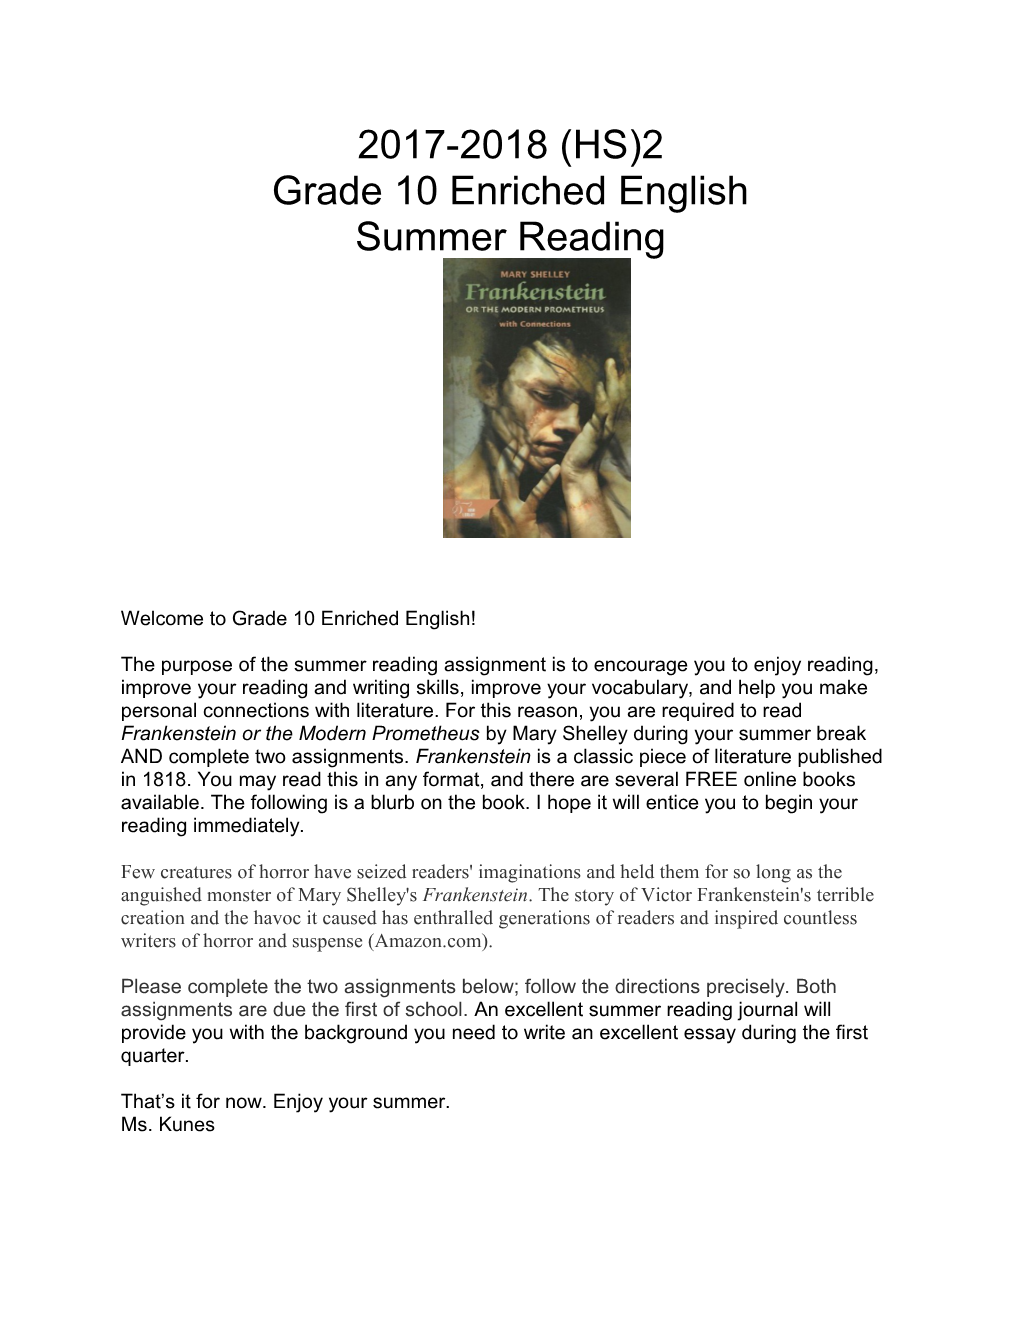 Grade 10 Enriched English